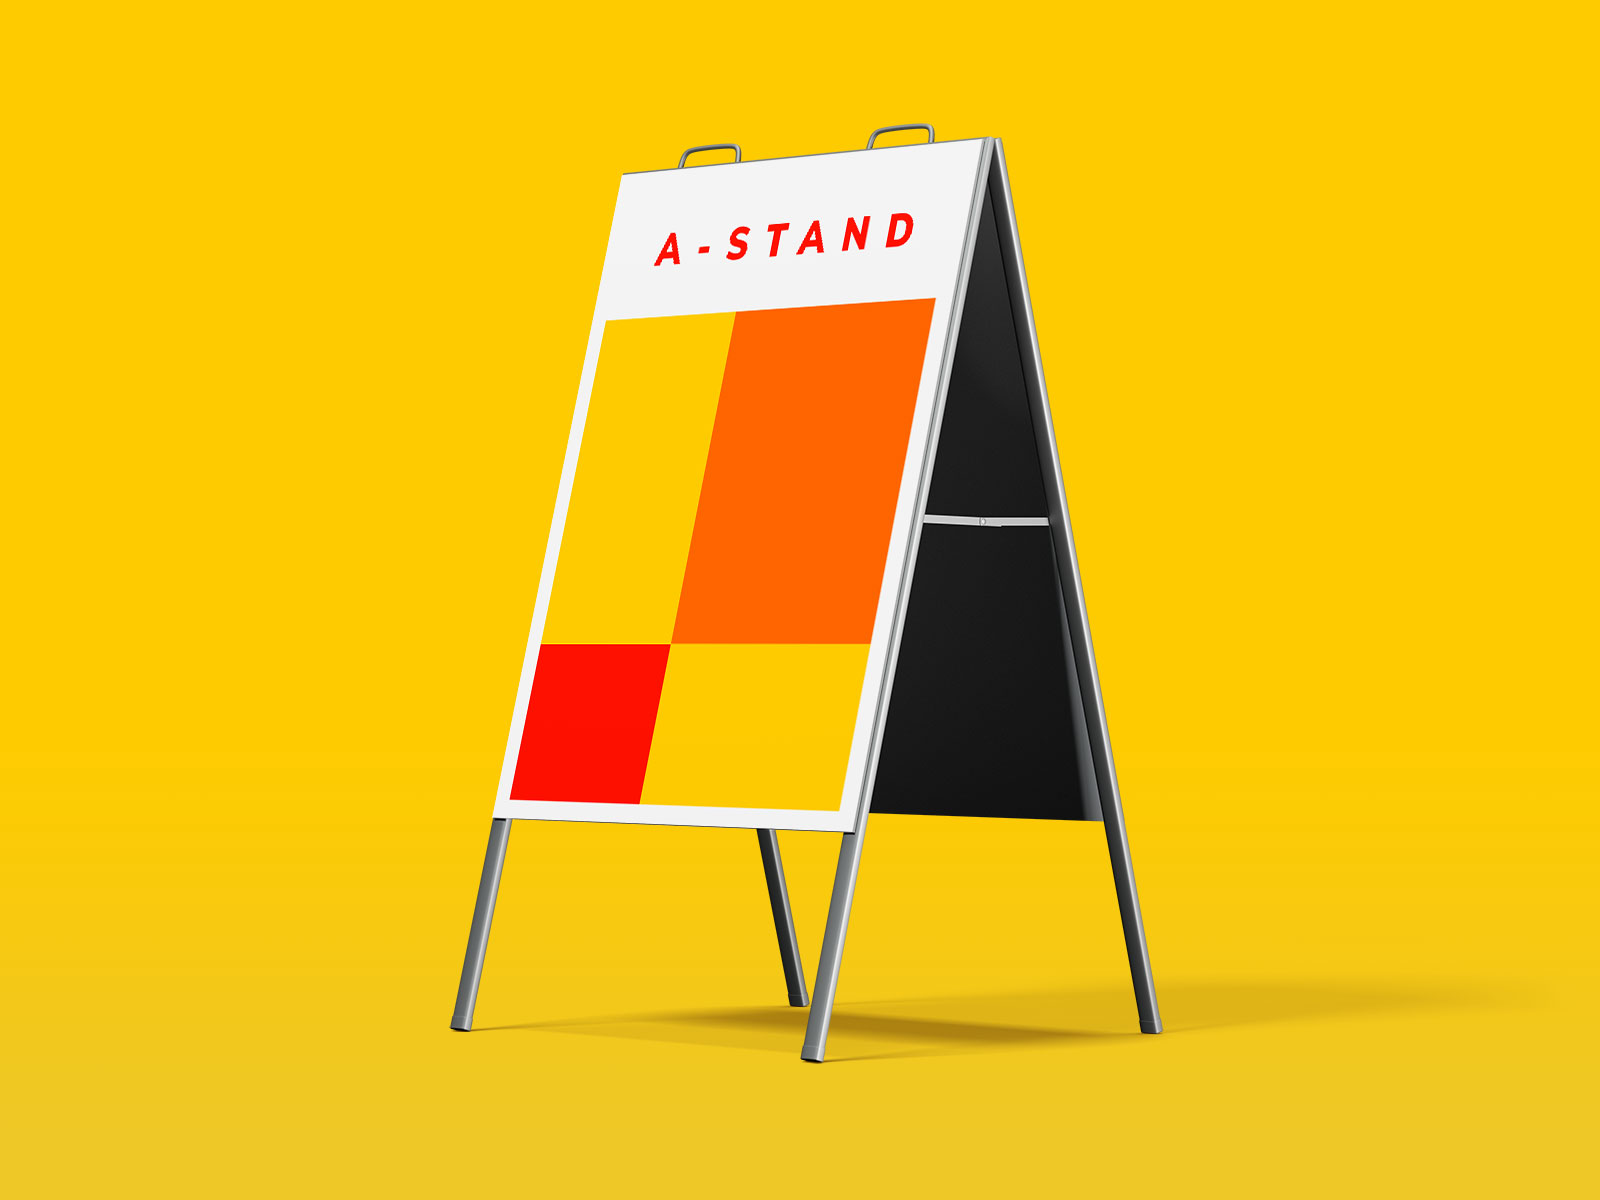 A-Stand Poster Display Mockup Set